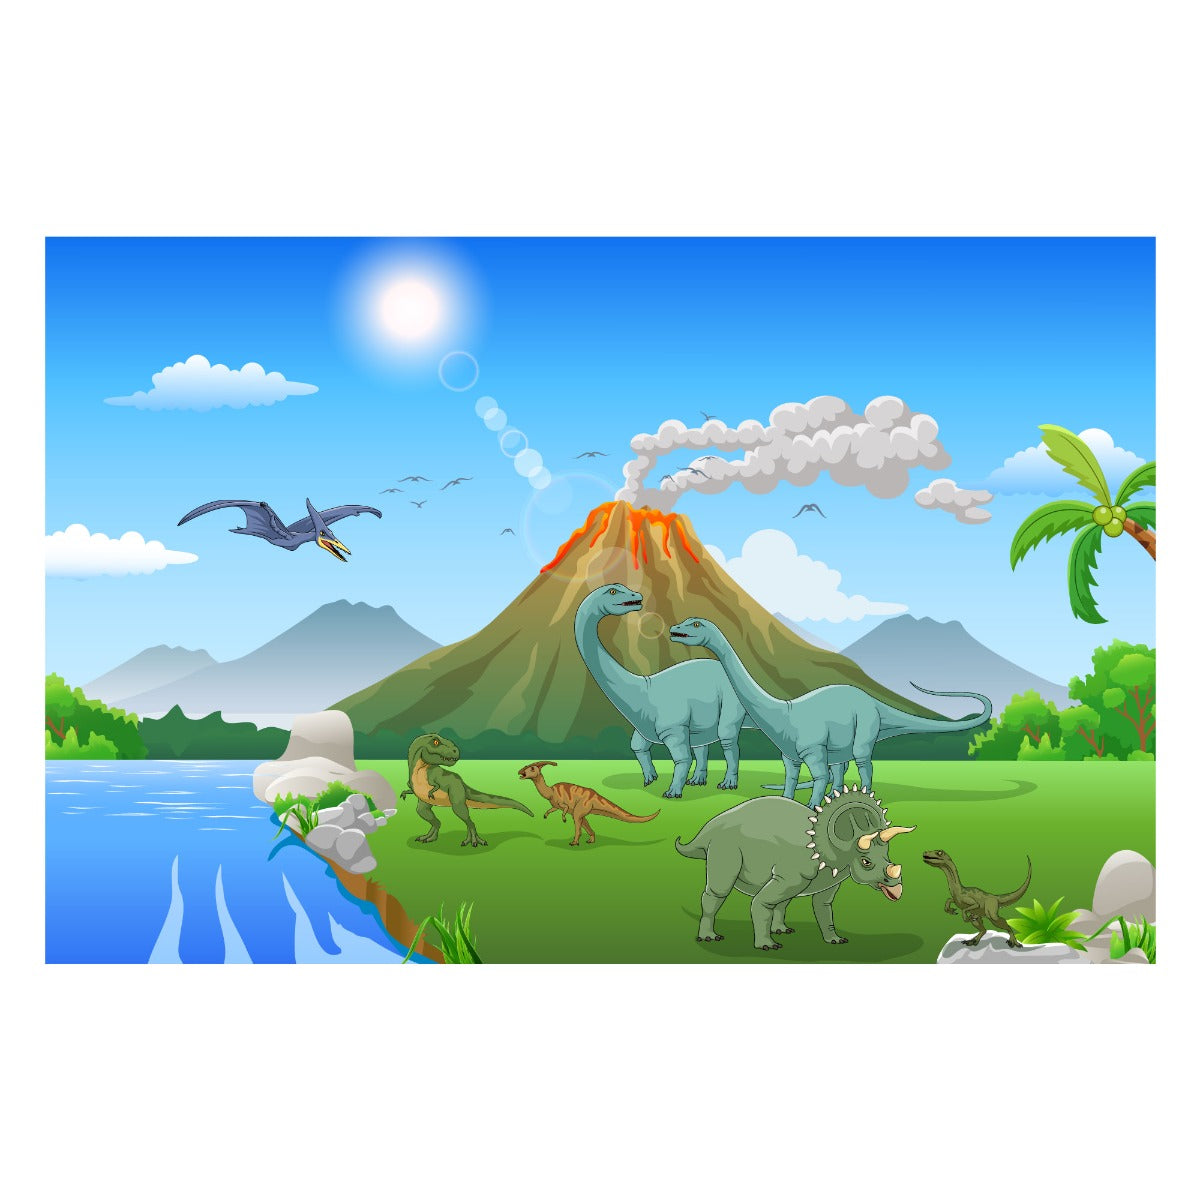 Dinosaur Wall Mural - Cartoon Dinosaur Land with Erupting Volcano Full Wall Mural